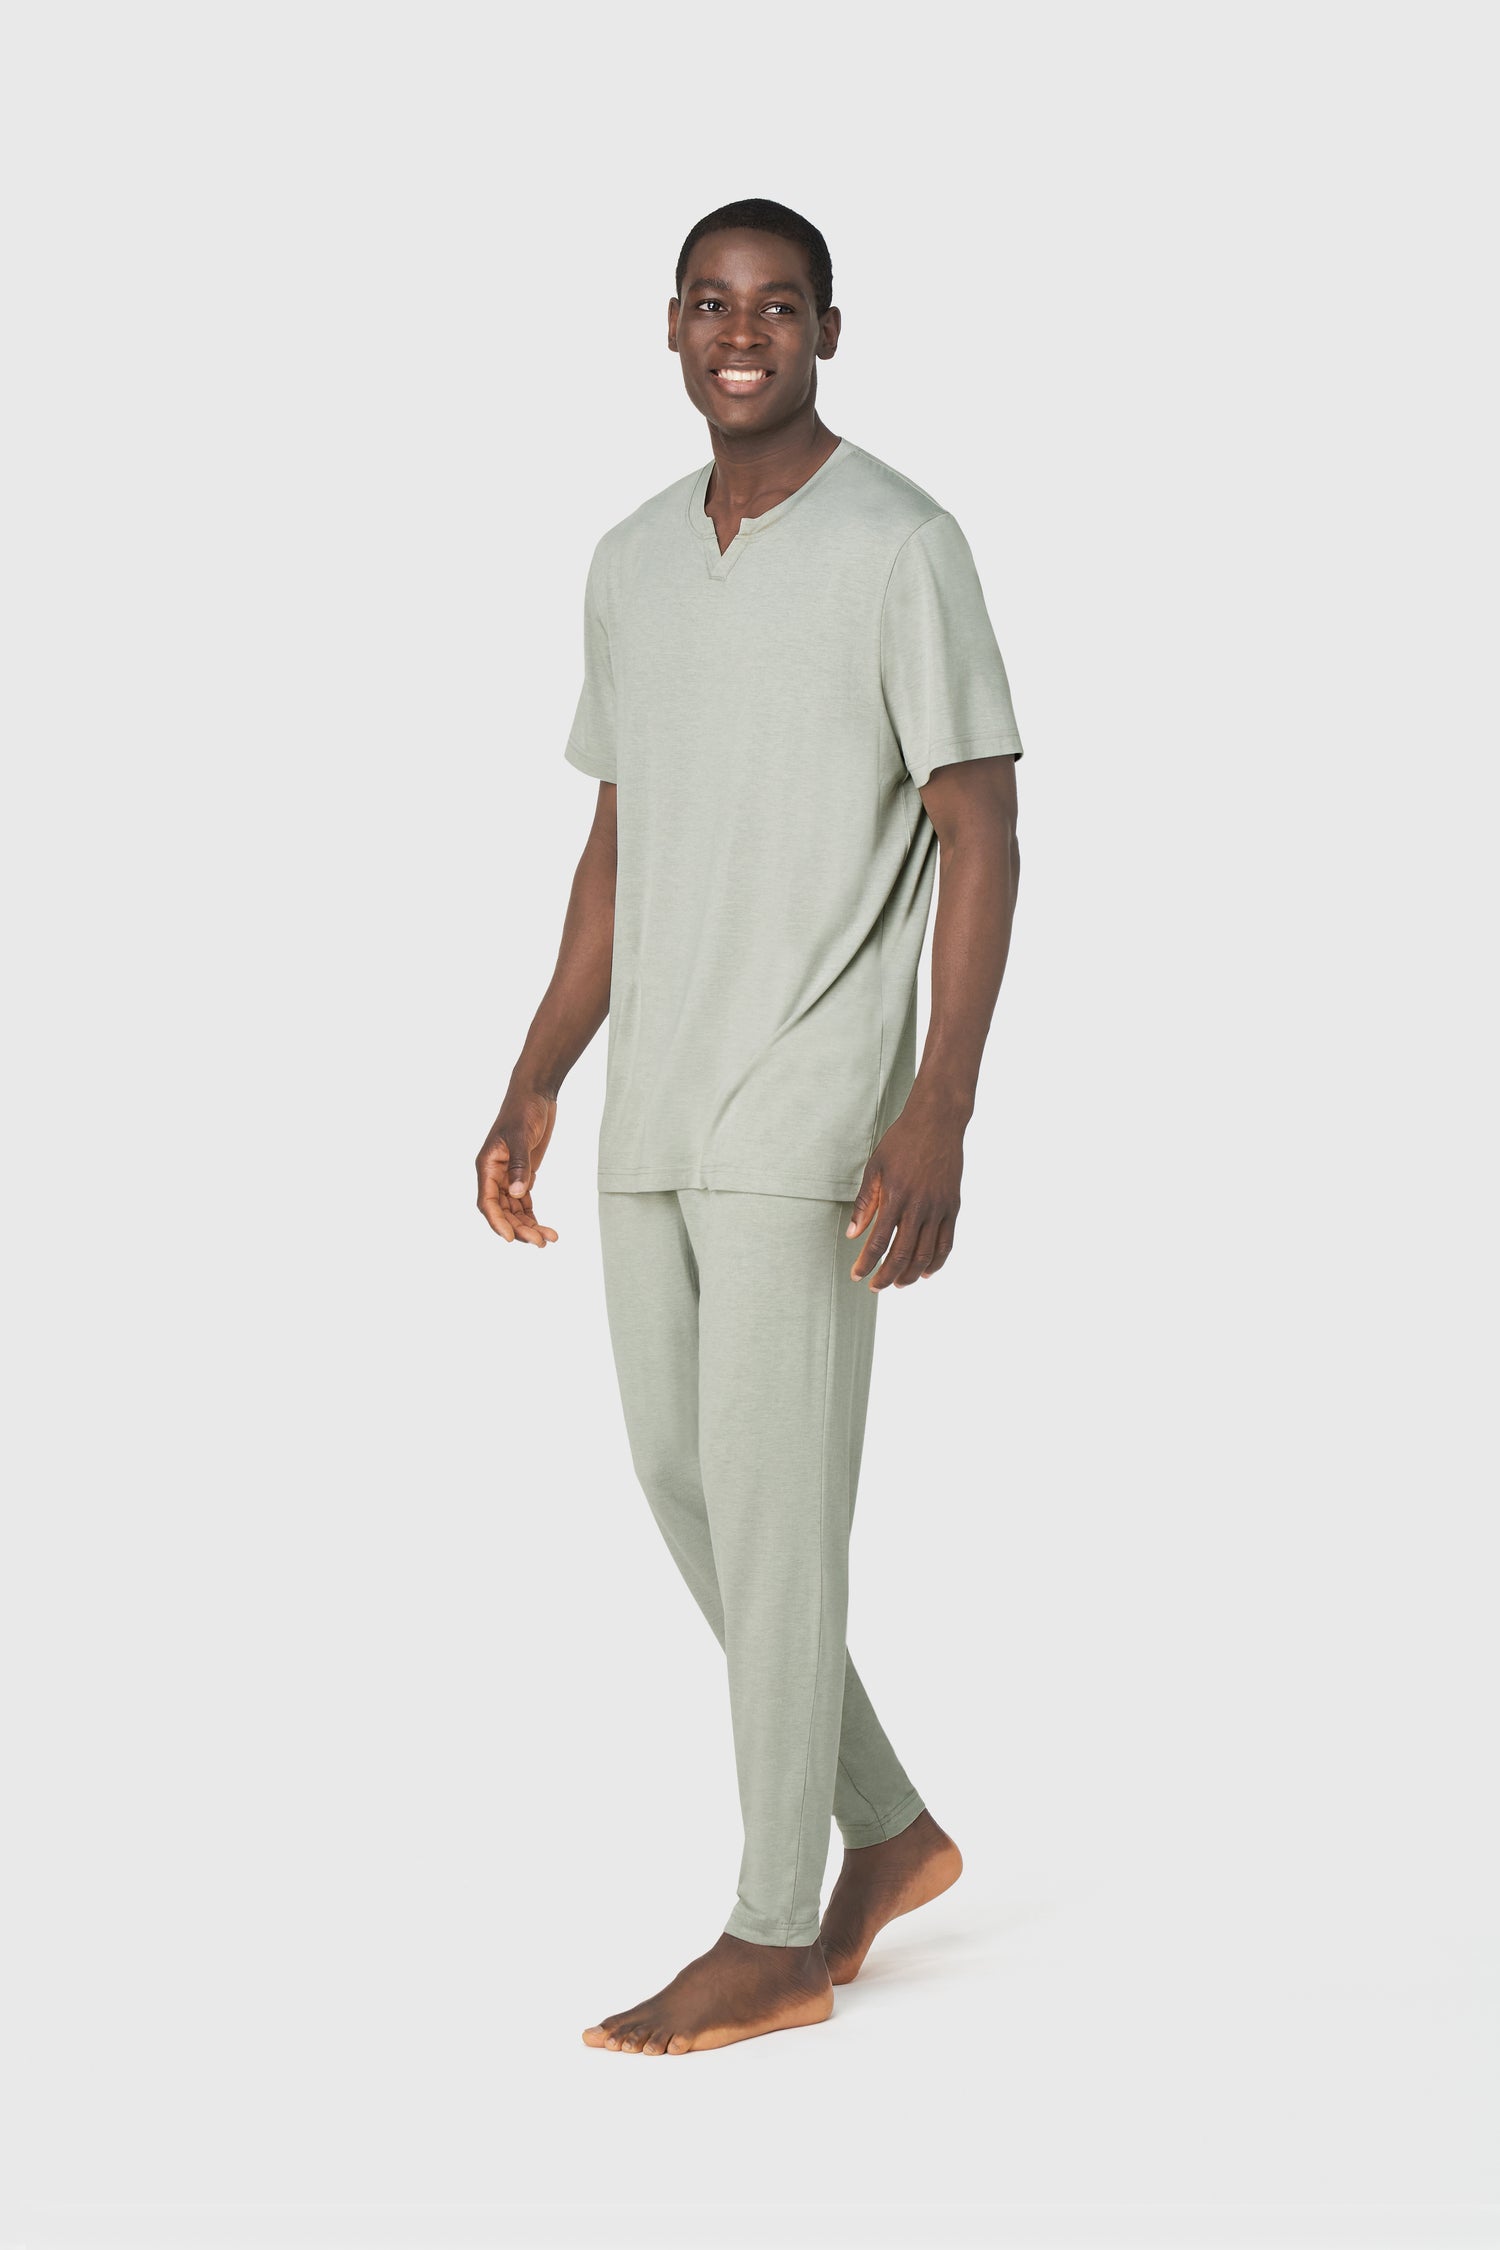 Free FWD Men's Cool Sleep Pant - Comfortable Loungewear - BEST SELLING